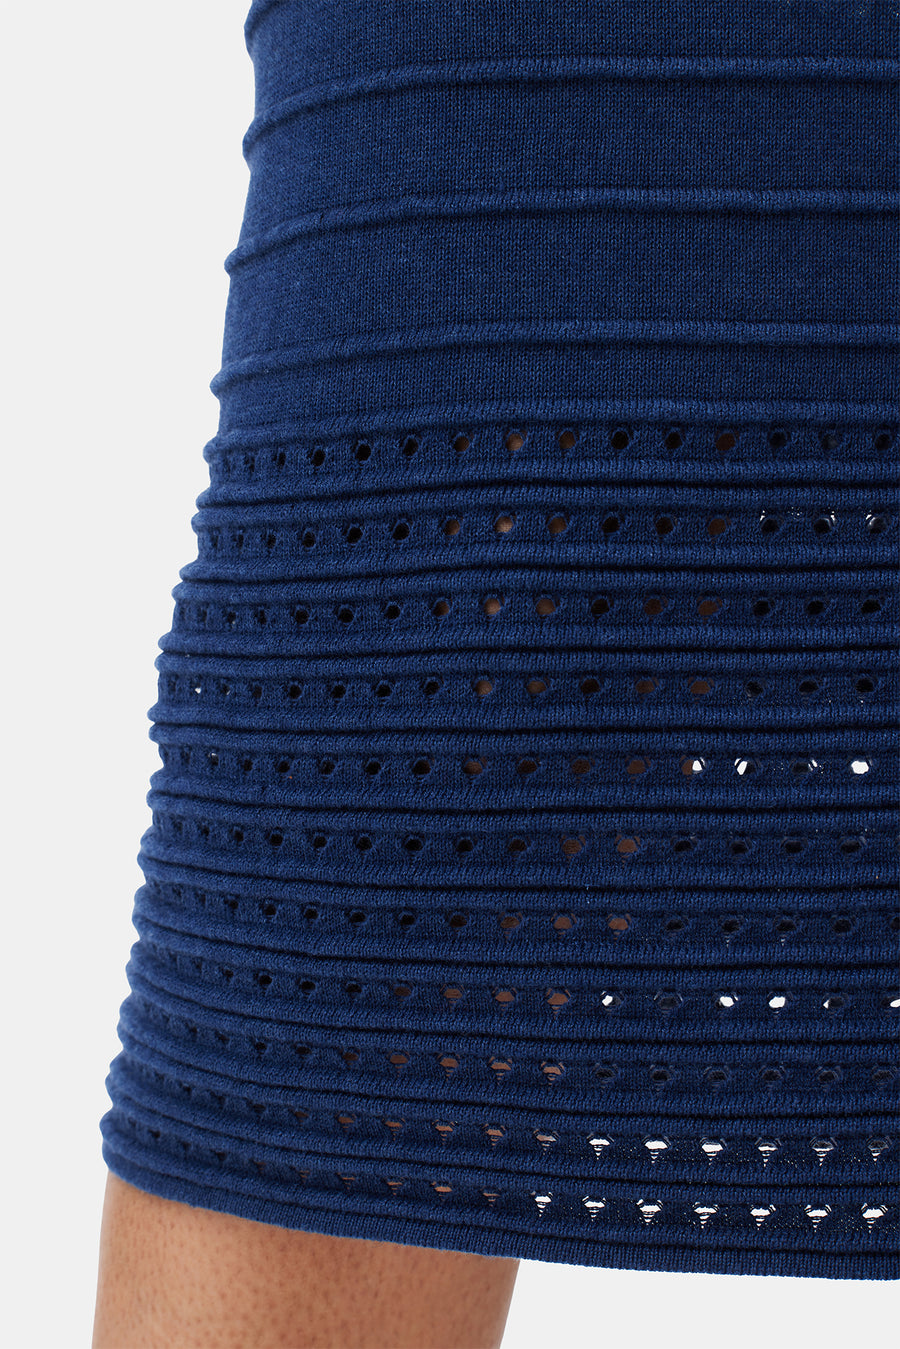 Cora Dress - Navy Blue